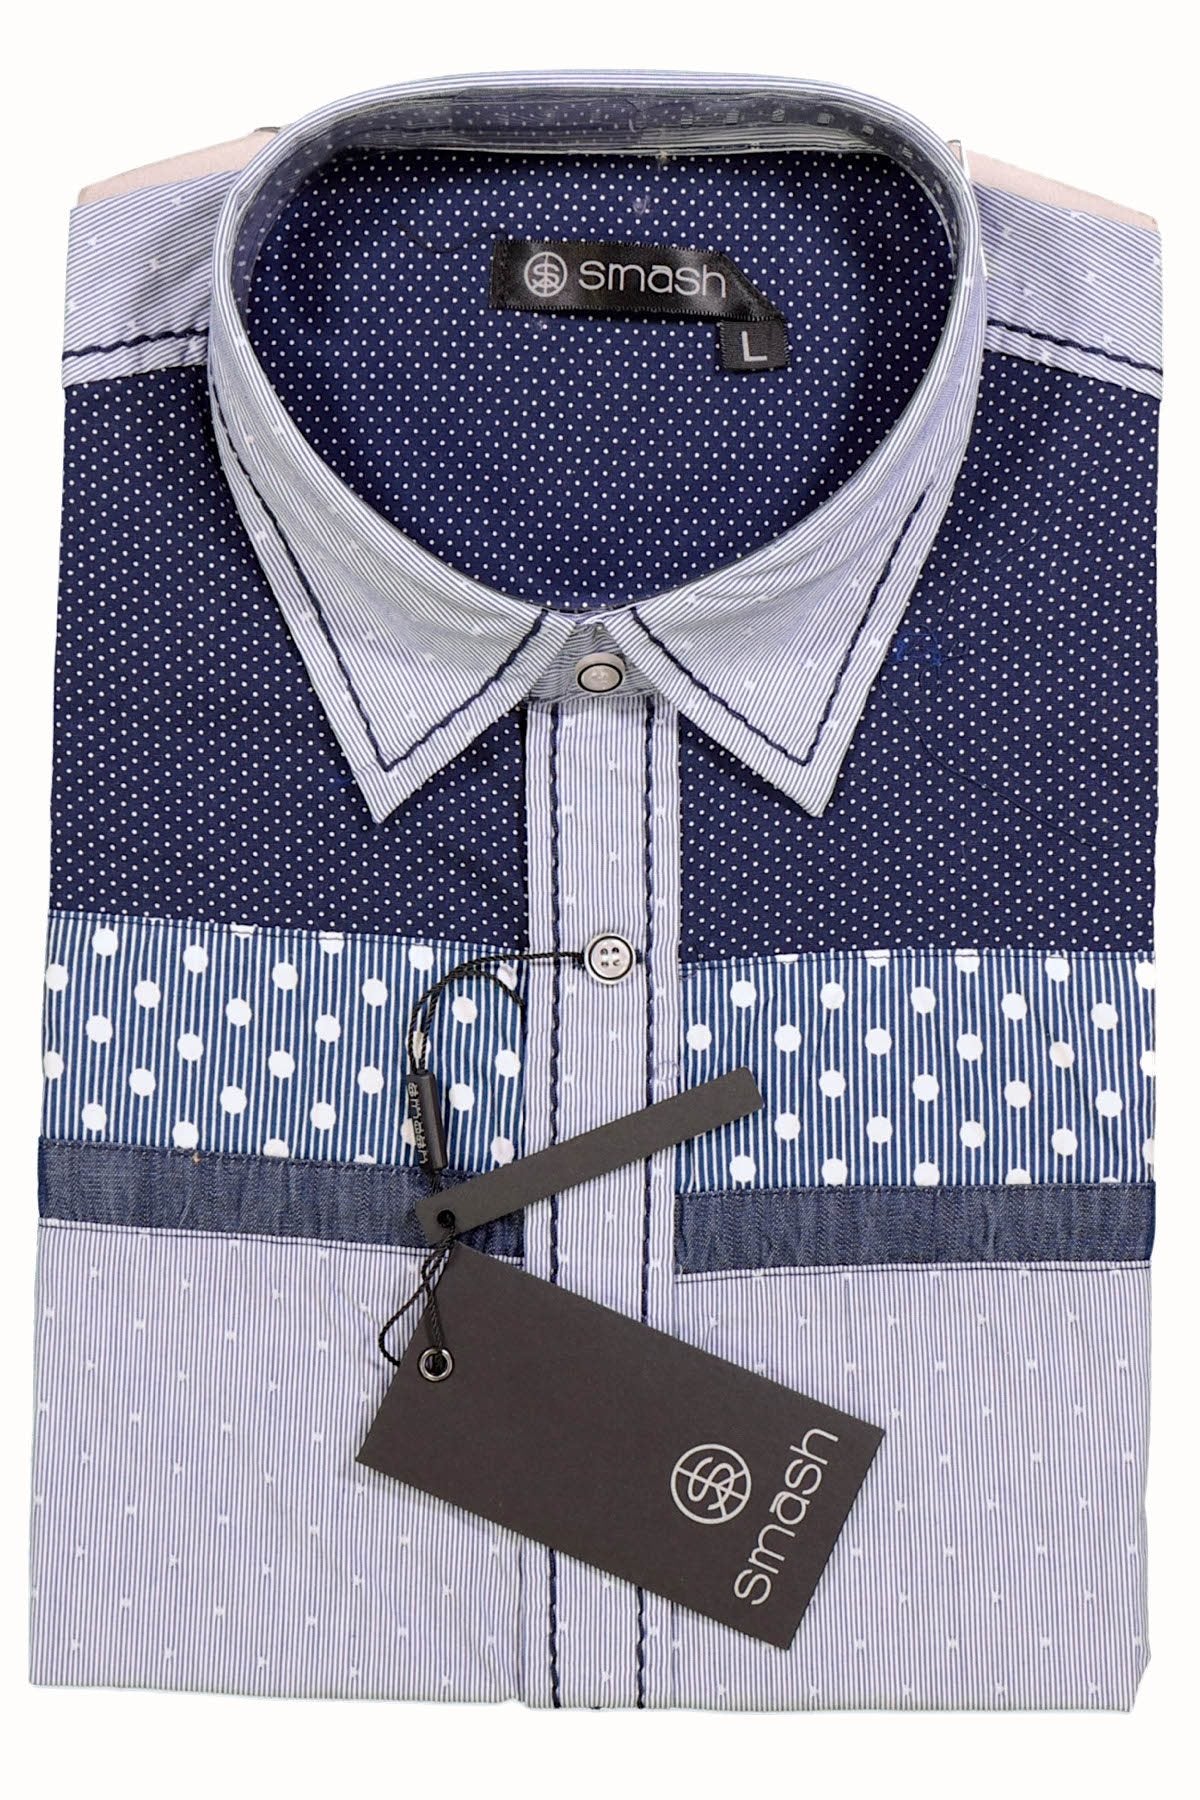 Smash Blue Polka Dot Button-Up Shirt